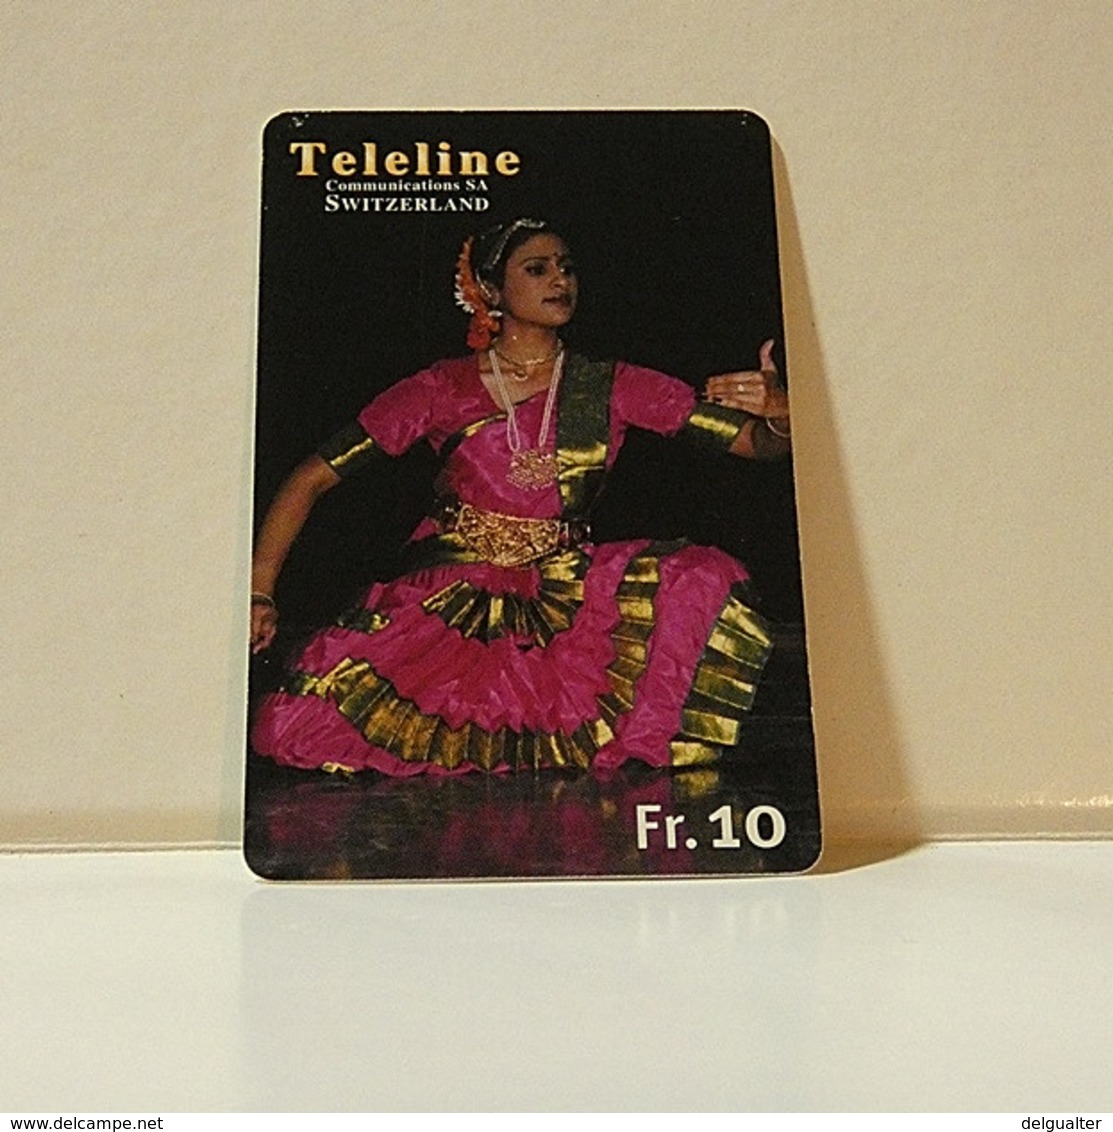 Phonecard - Switzerland - Teleline - 10 Francs - Switzerland